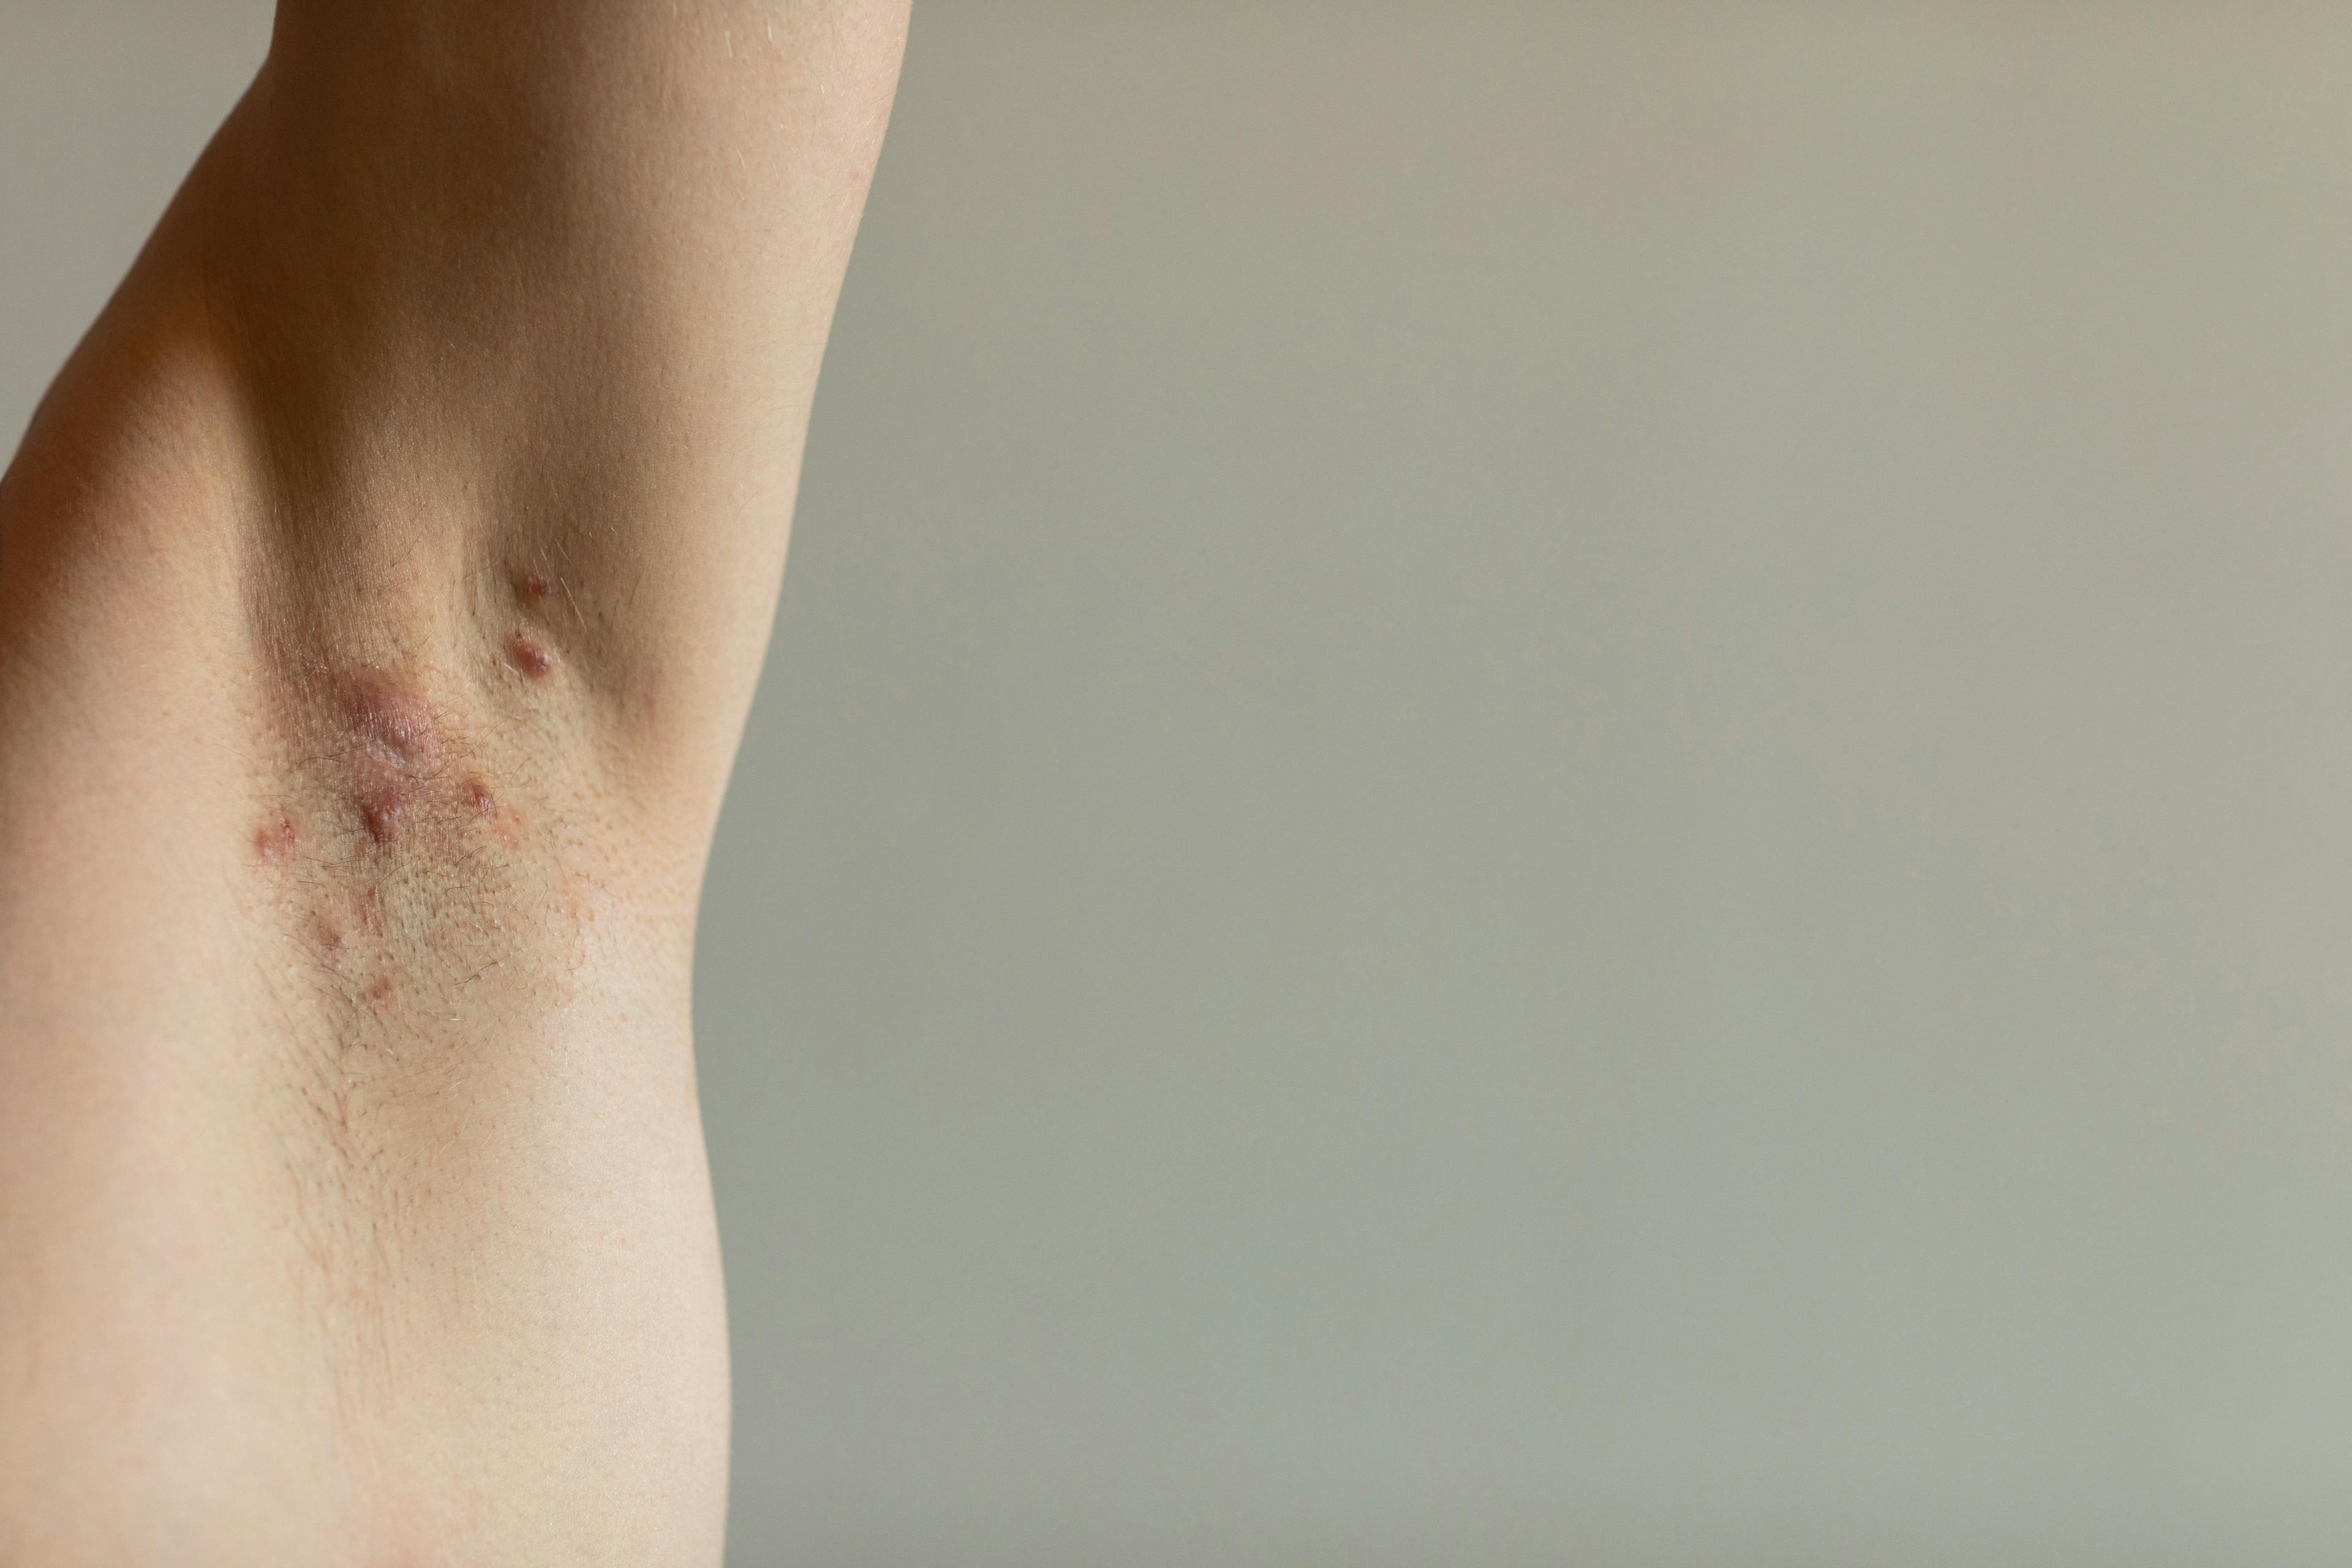 Patient with hidradenitis under armpit -- Image credit: Lea | stock.adobe.com